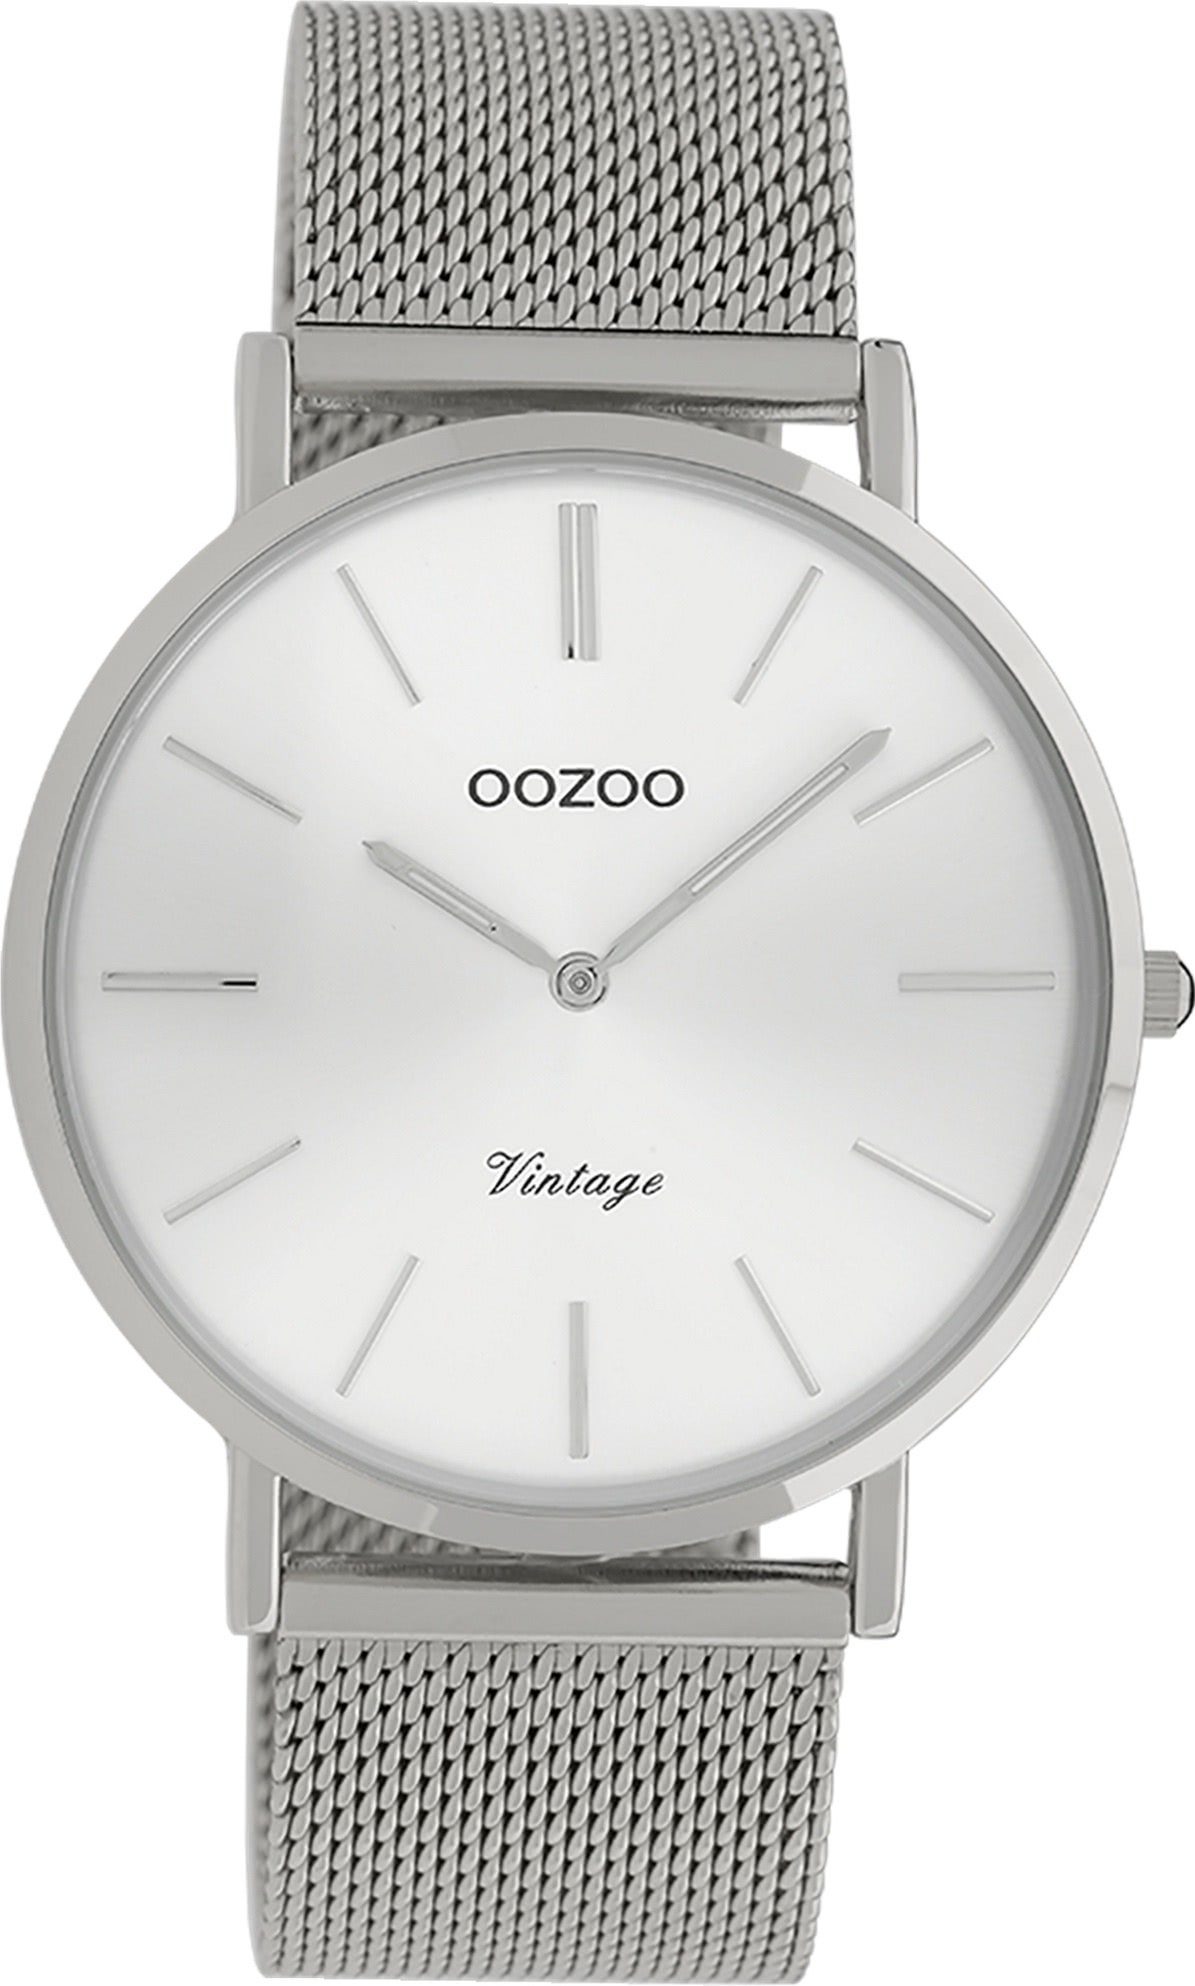 OOZOO Quarzuhr Oozoo Herren Armbanduhr silber Analog, Herrenuhr rund, groß (ca. 40mm) Edelstahlarmband, Fashion-Style